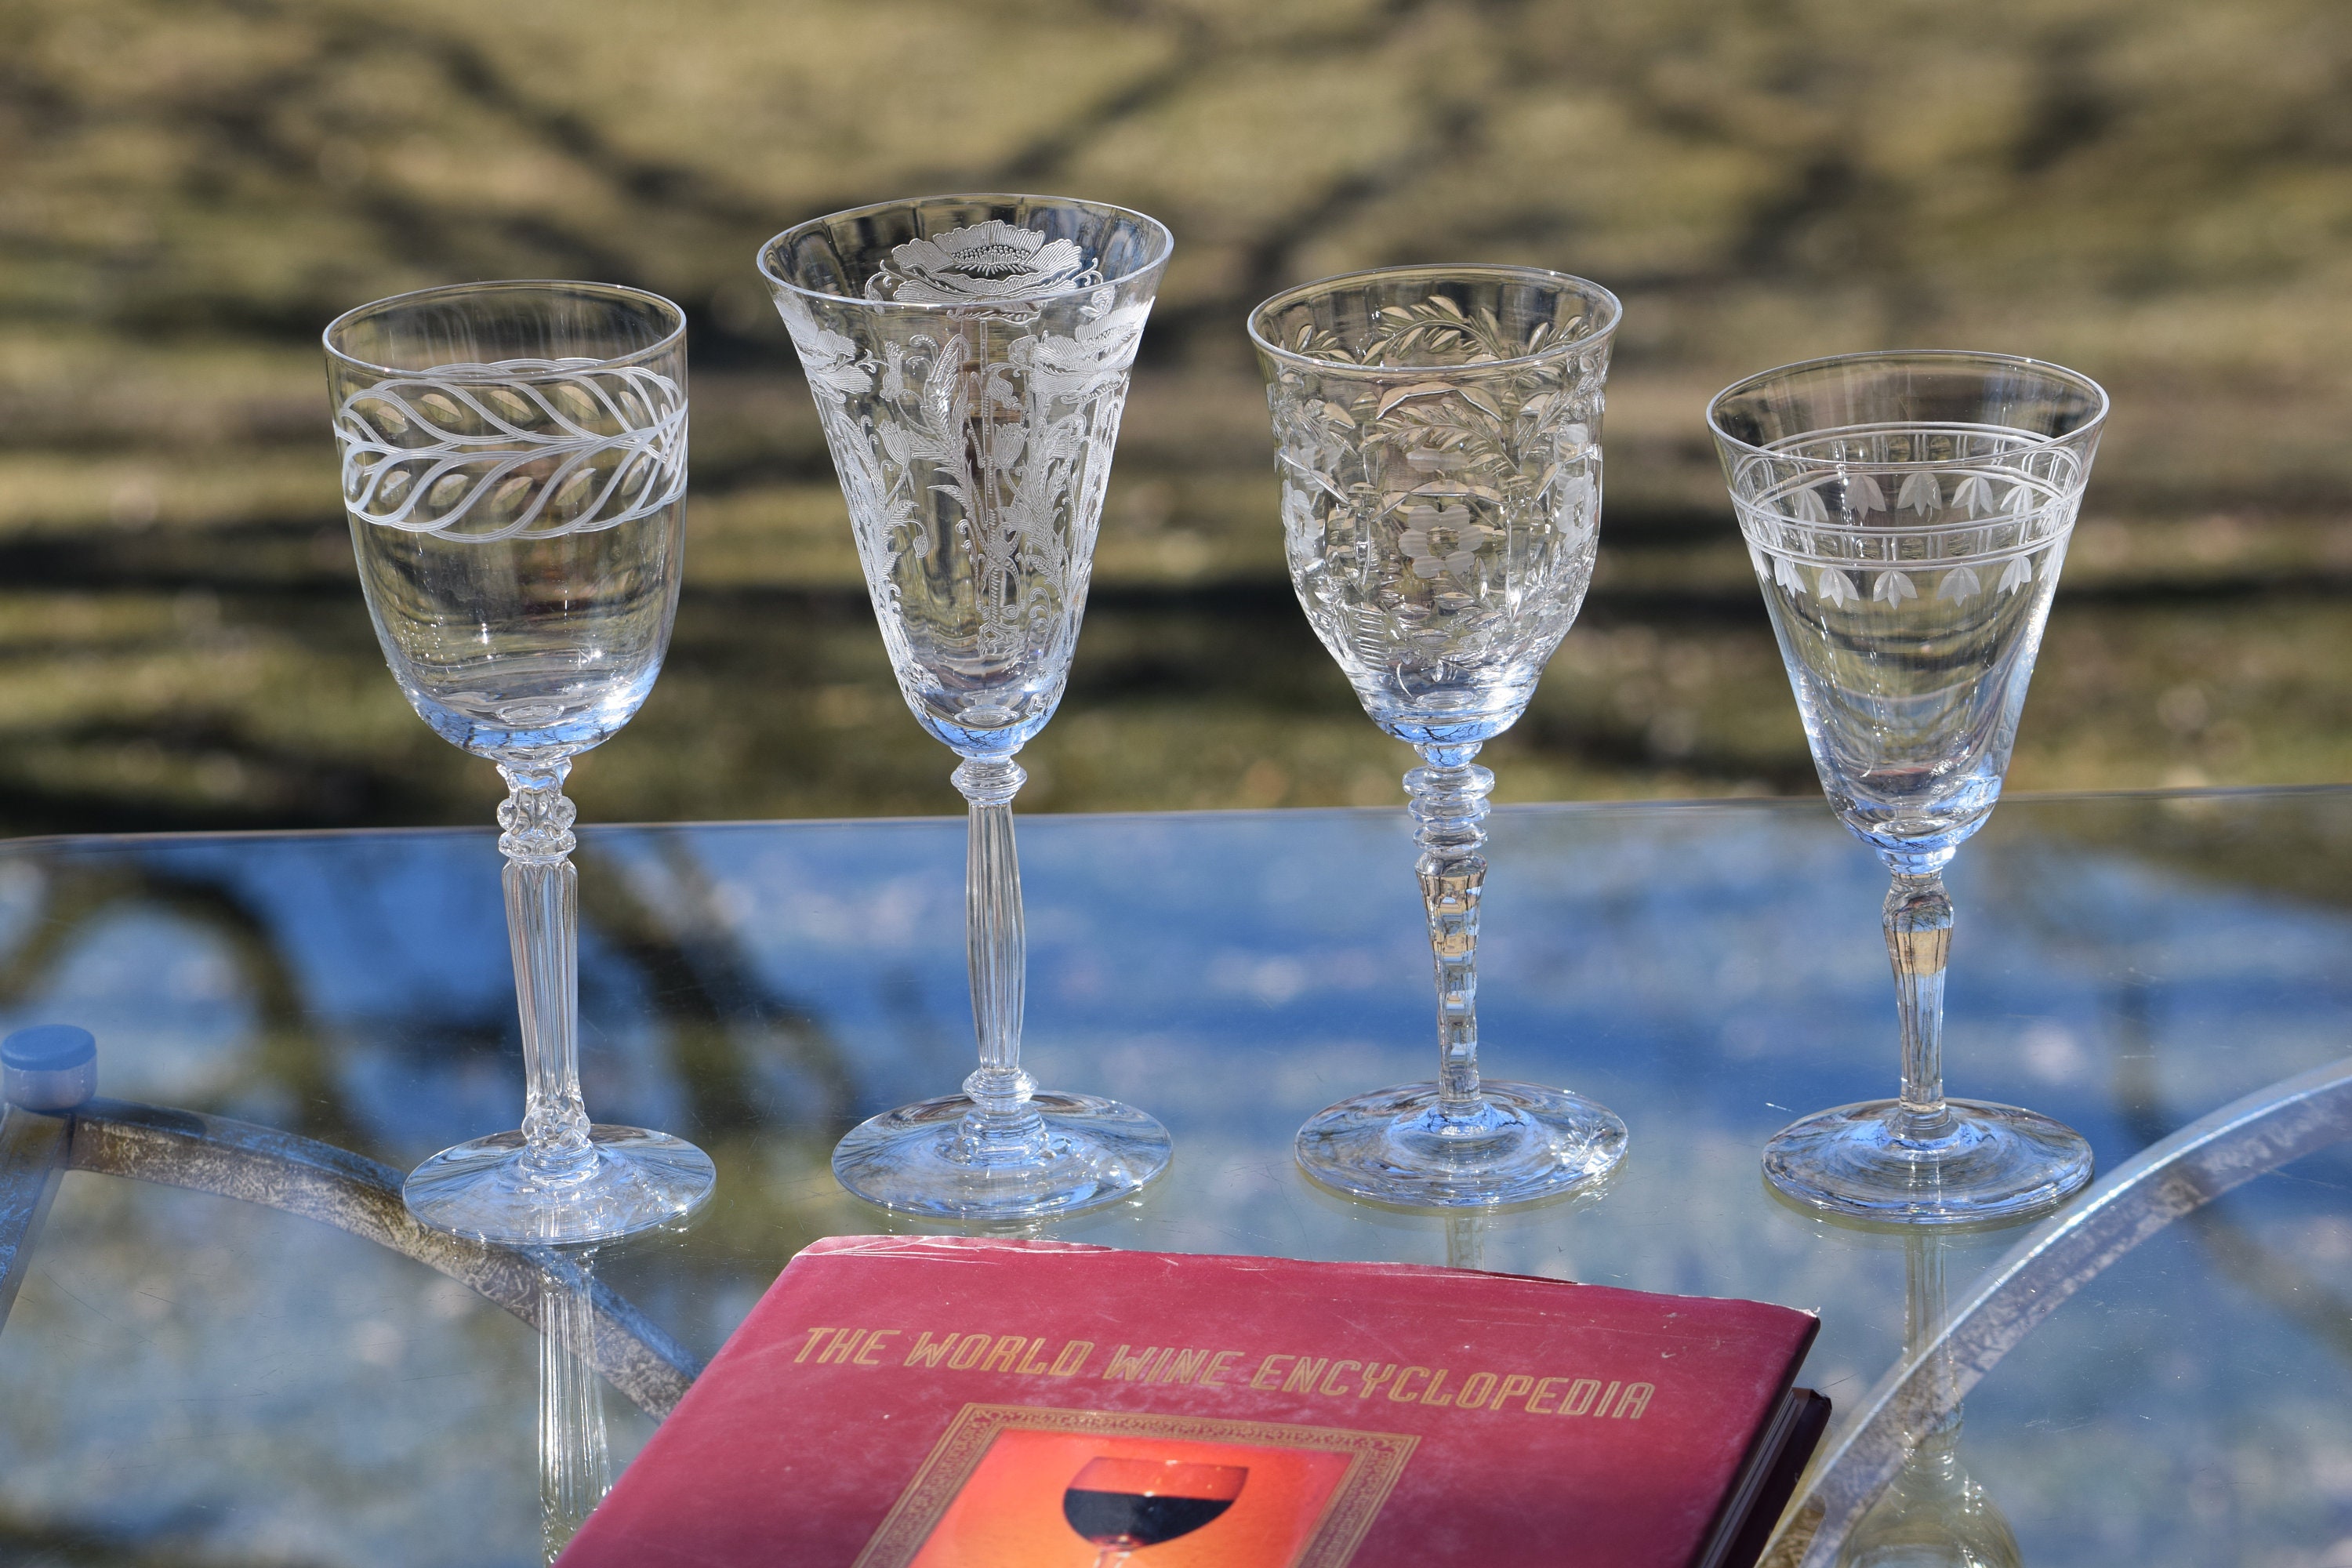 Vintage Etched Wine Glasses Set Of 4 Set Of 4 Mis Matched Etched Wine